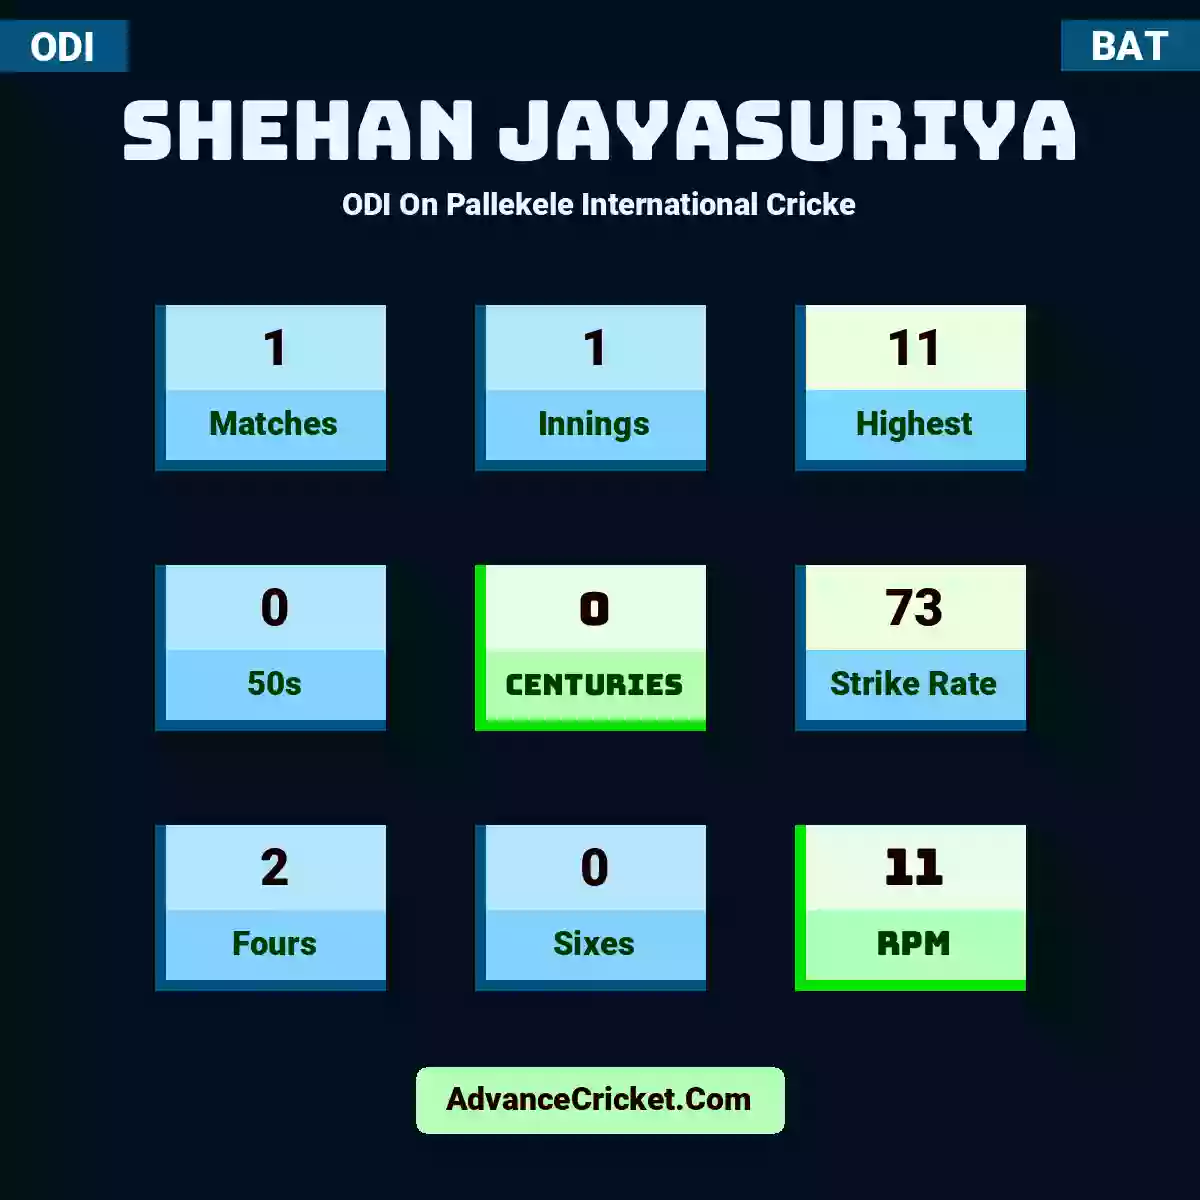 Shehan Jayasuriya ODI  On Pallekele International Cricke, Shehan Jayasuriya played 1 matches, scored 11 runs as highest, 0 half-centuries, and 0 centuries, with a strike rate of 73. S.Jayasuriya hit 2 fours and 0 sixes, with an RPM of 11.